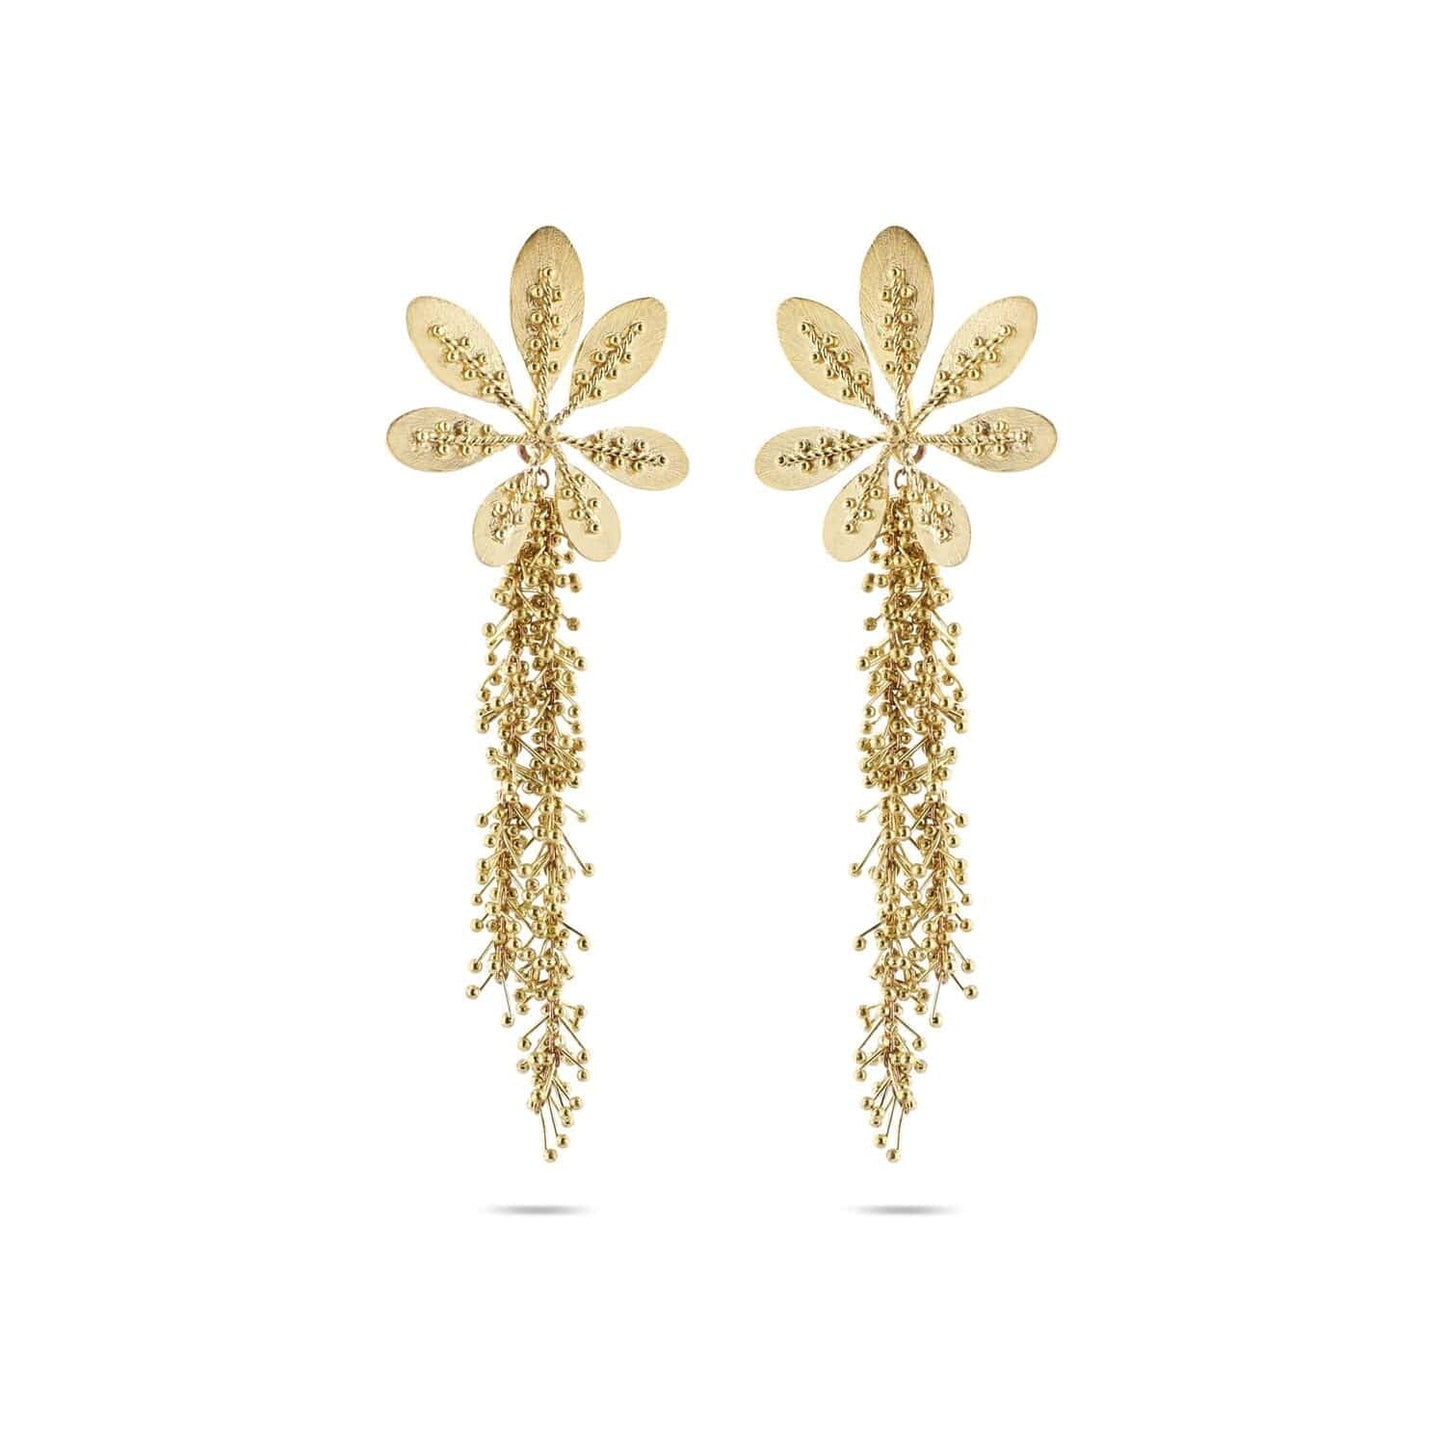 Christine Bekaert Jewelry Earring Peacock Beads